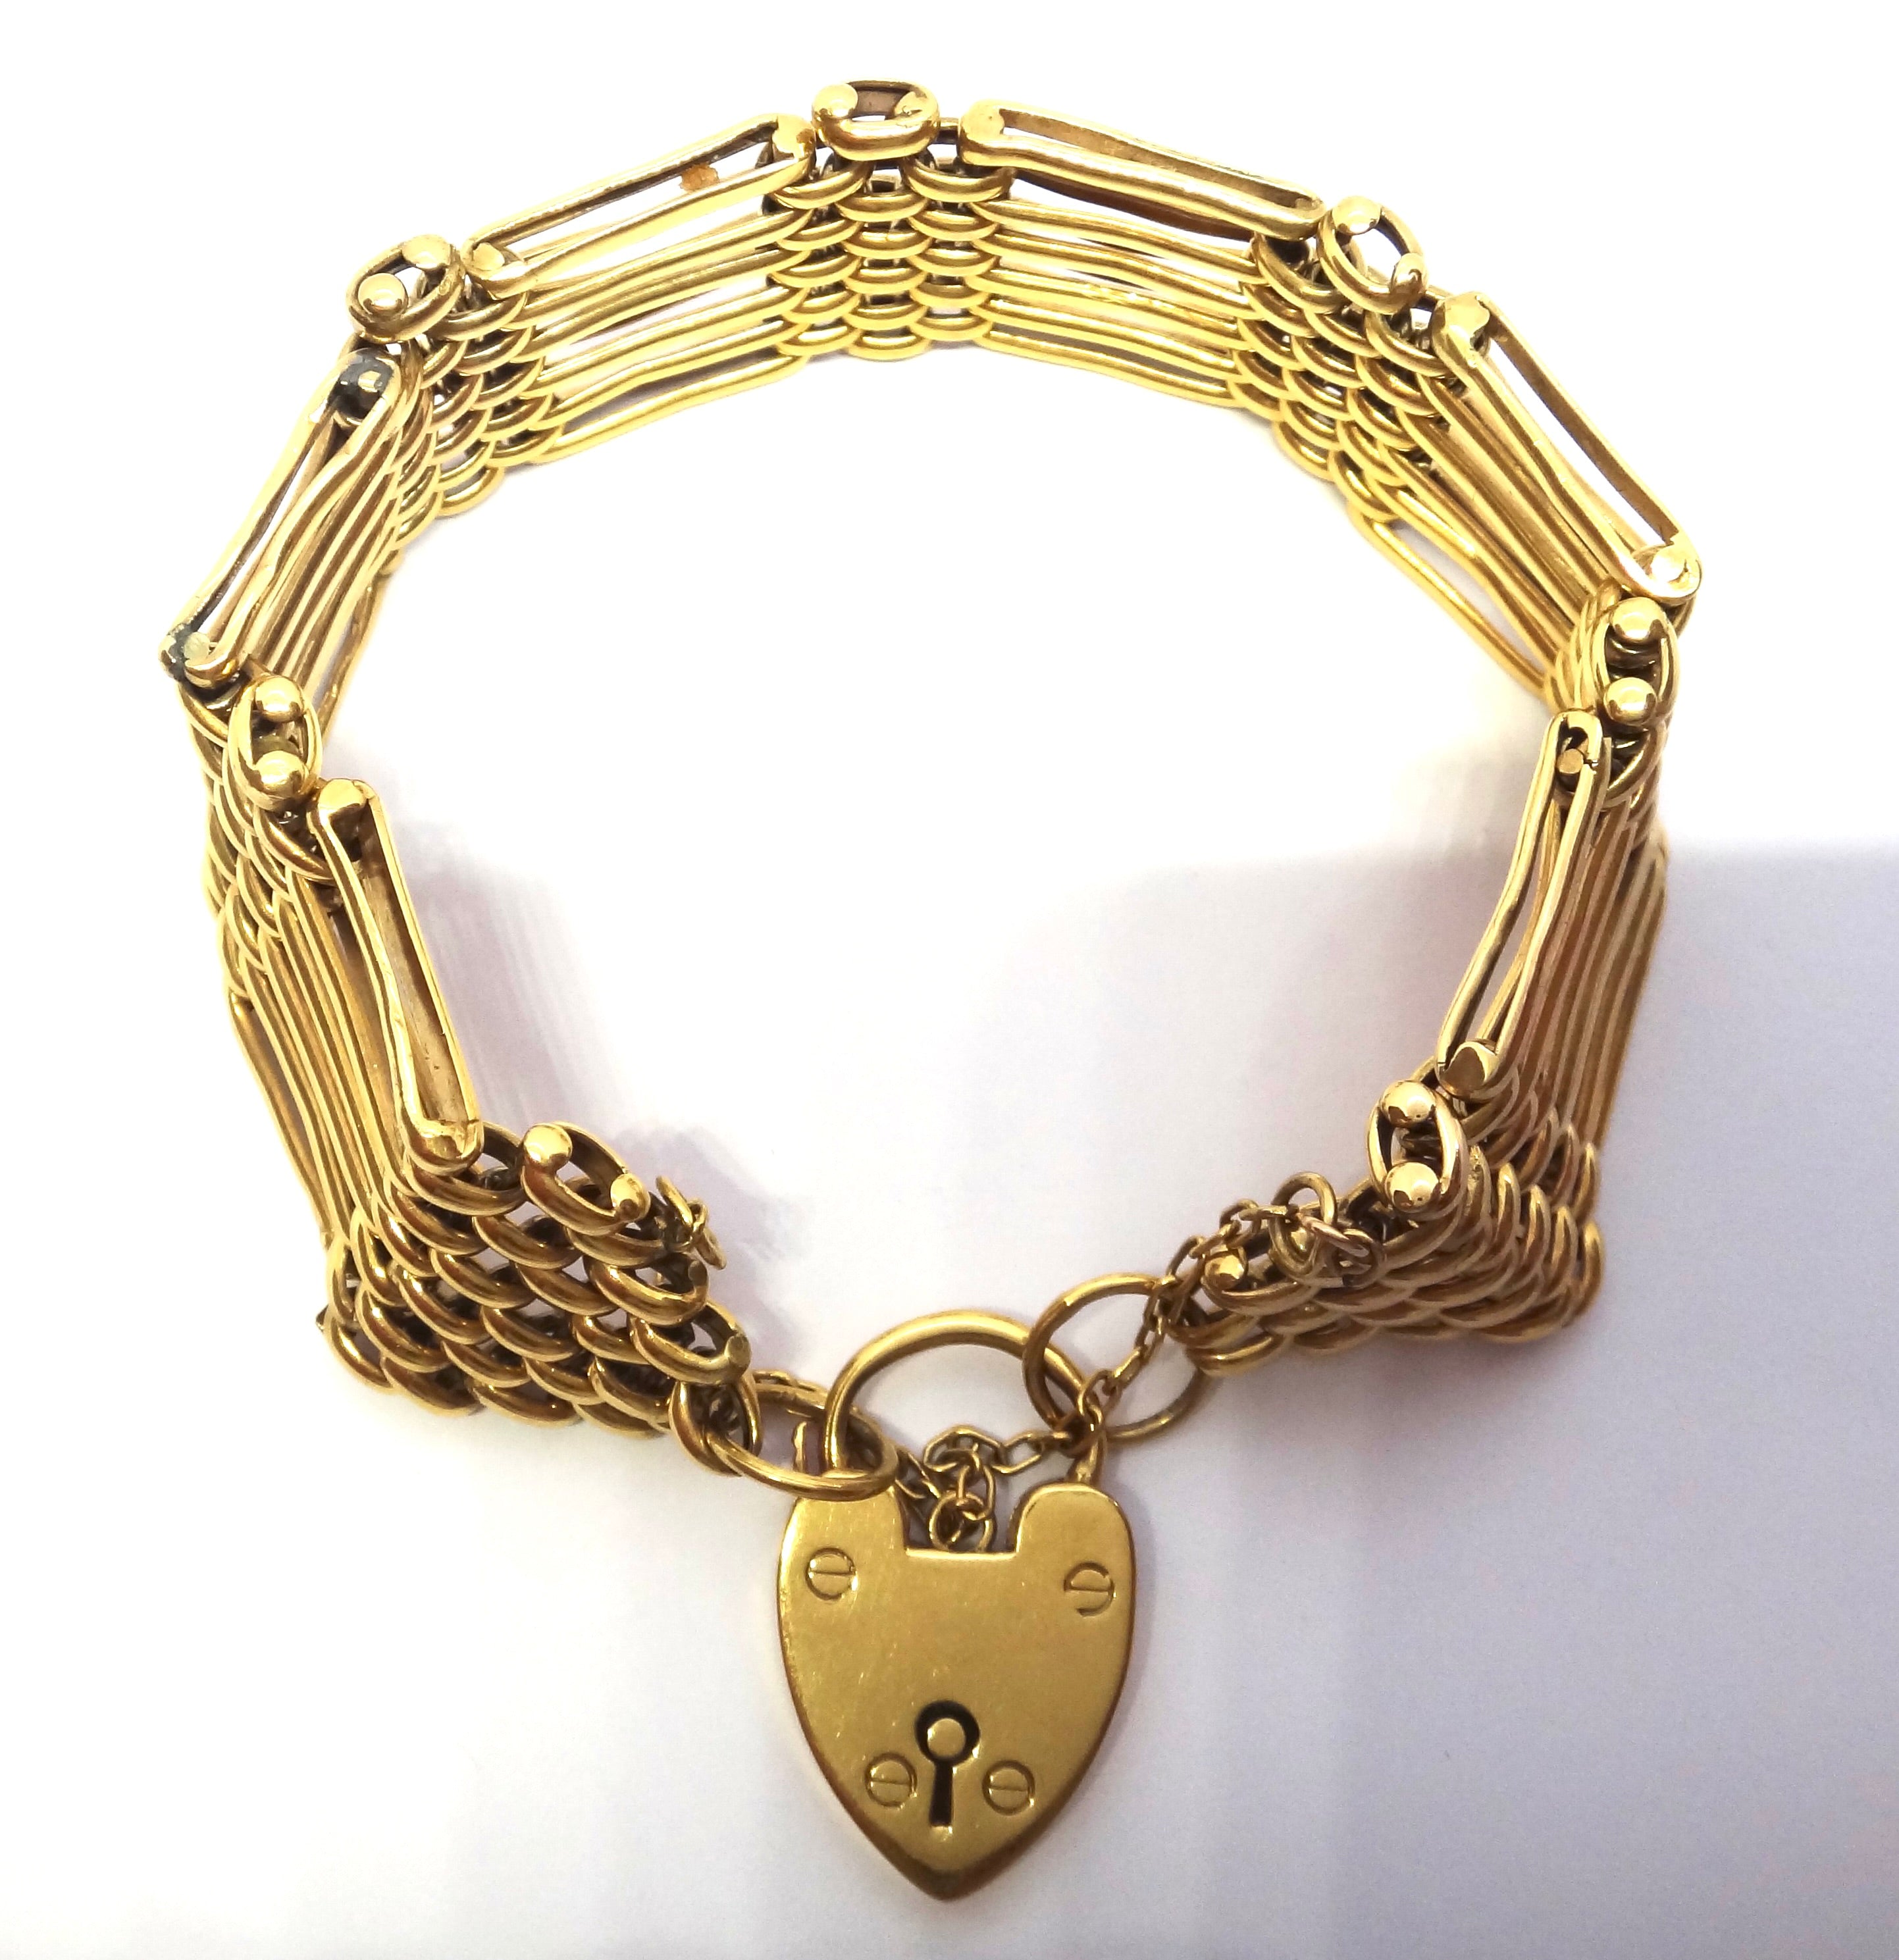 ANTIQUE 9ct Yellow GOLD Wide Gate Link Bracelet c.1900